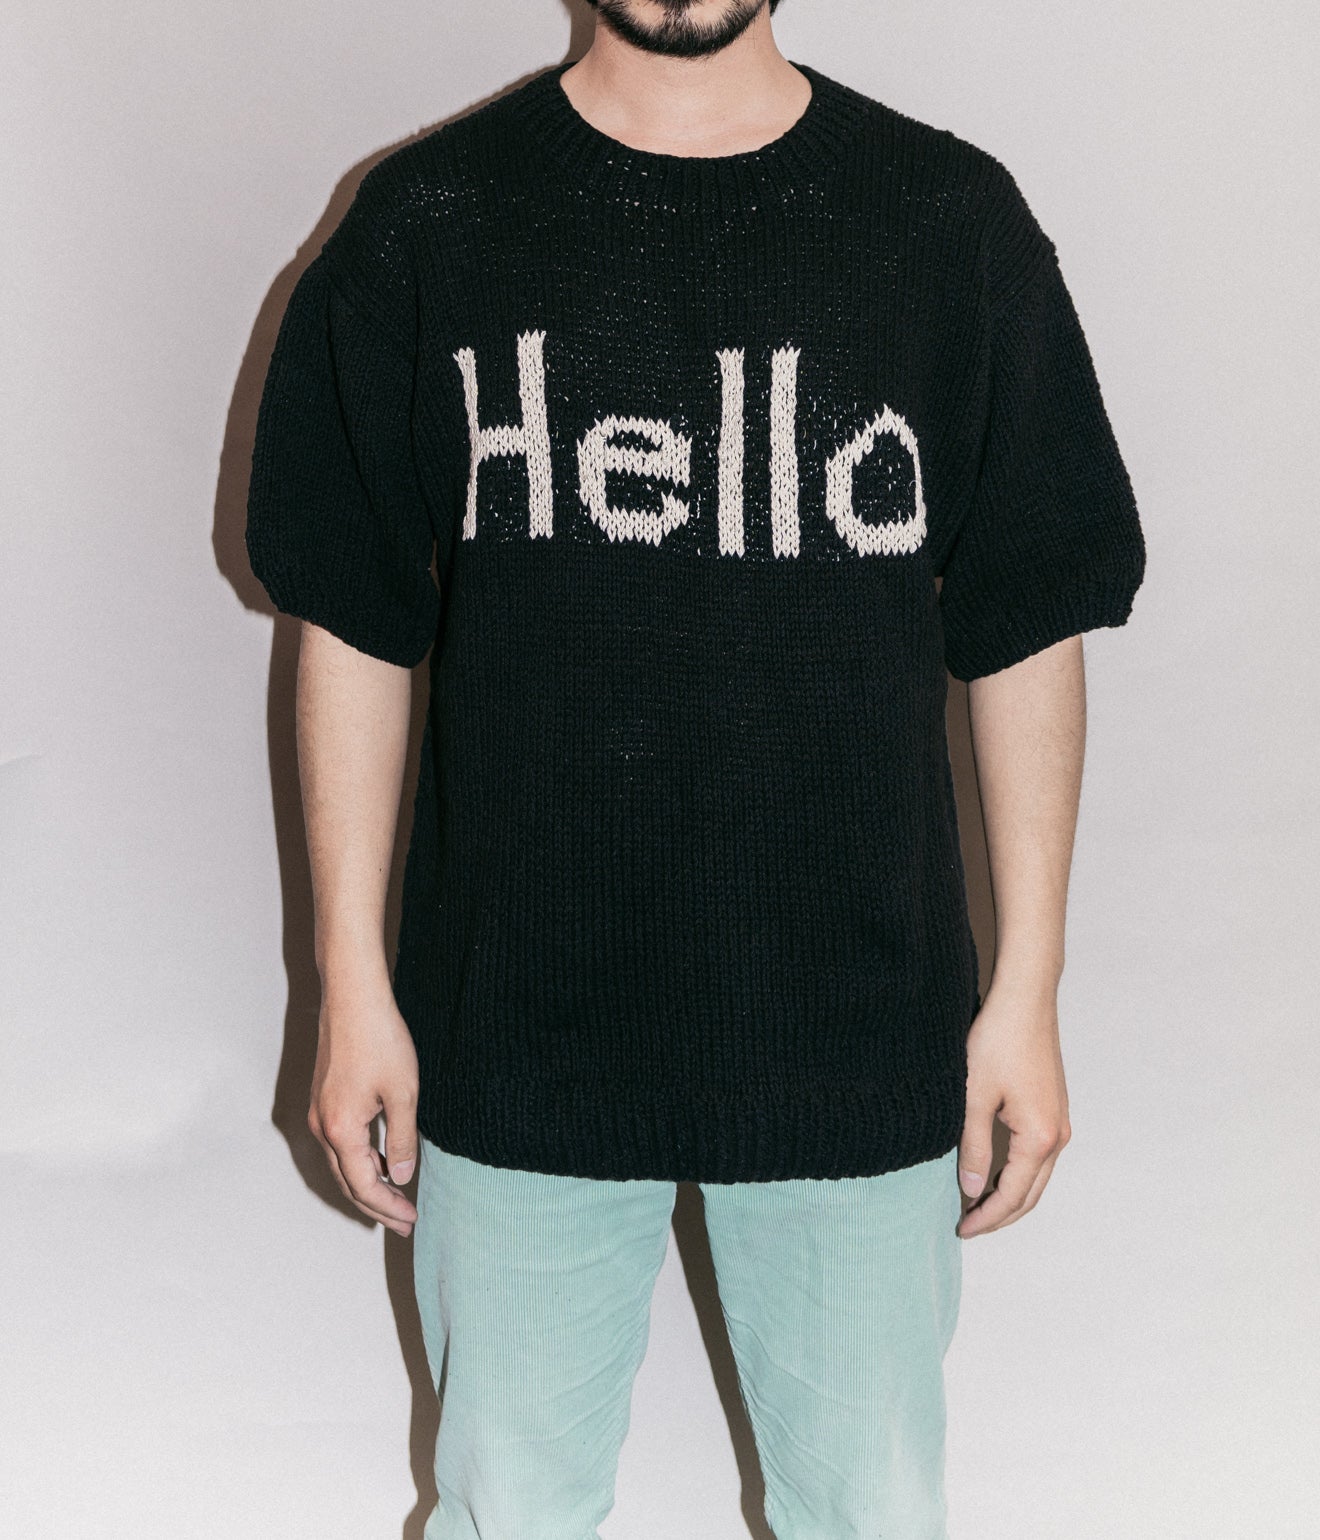 MacMahon Knitting Mills "S/S Crew Neck Knit-Hello" Black - WEAREALLANIMALS